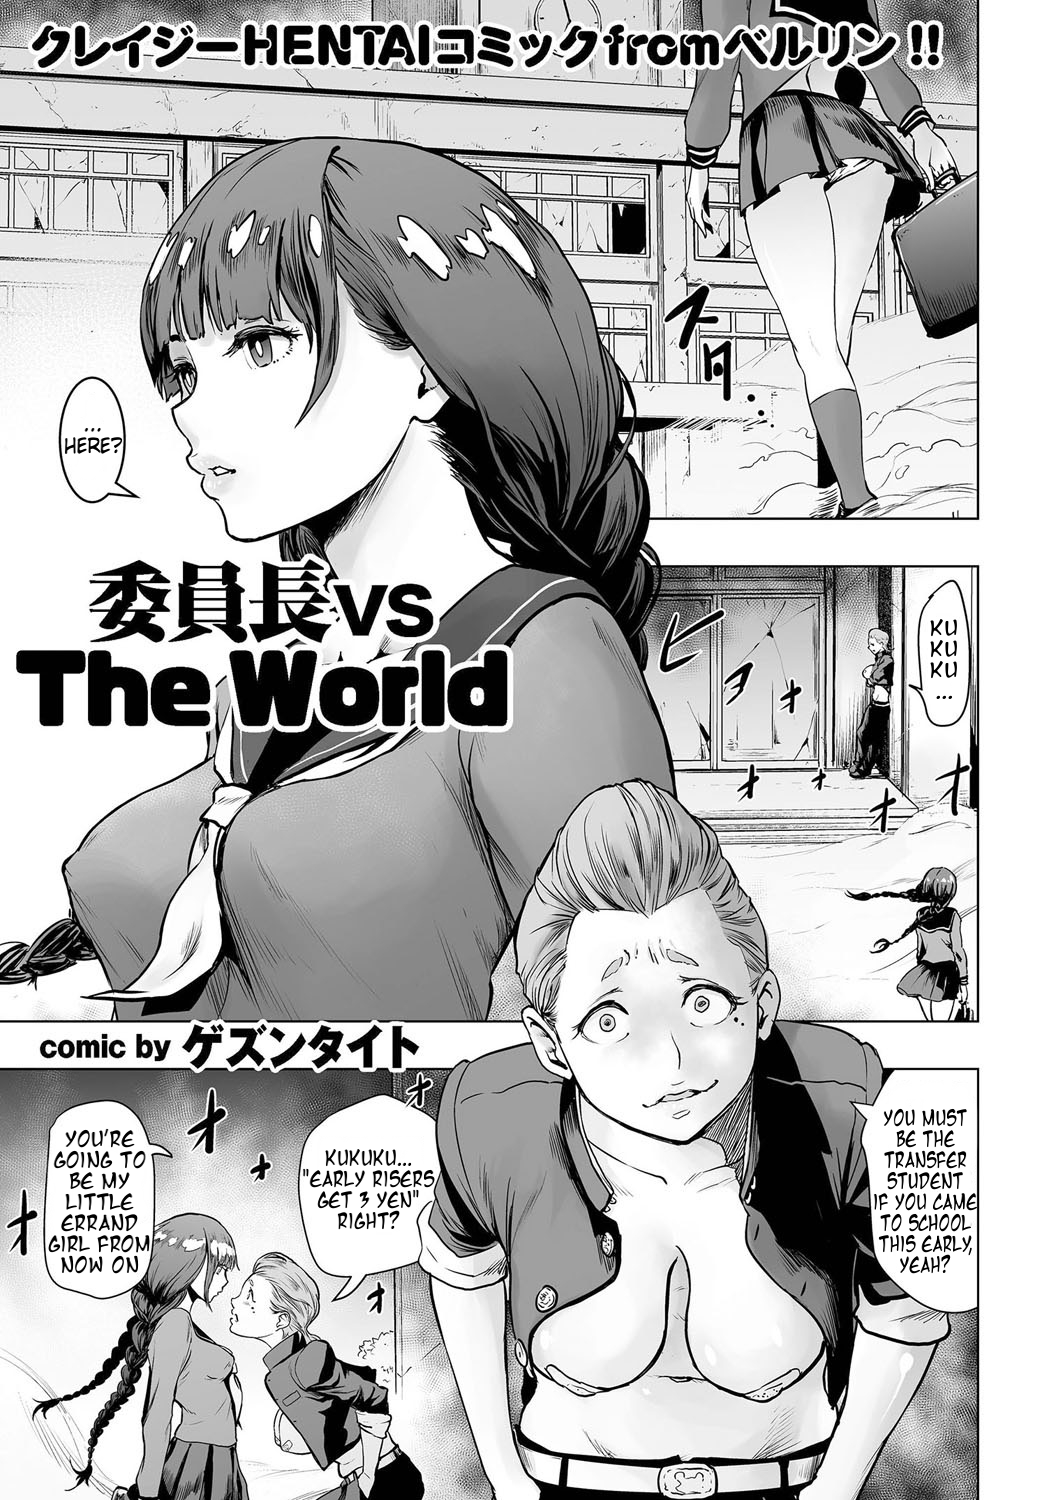 Iinchou vs The World comic KURiBERON 2016 09 Vol 46 English Digital00